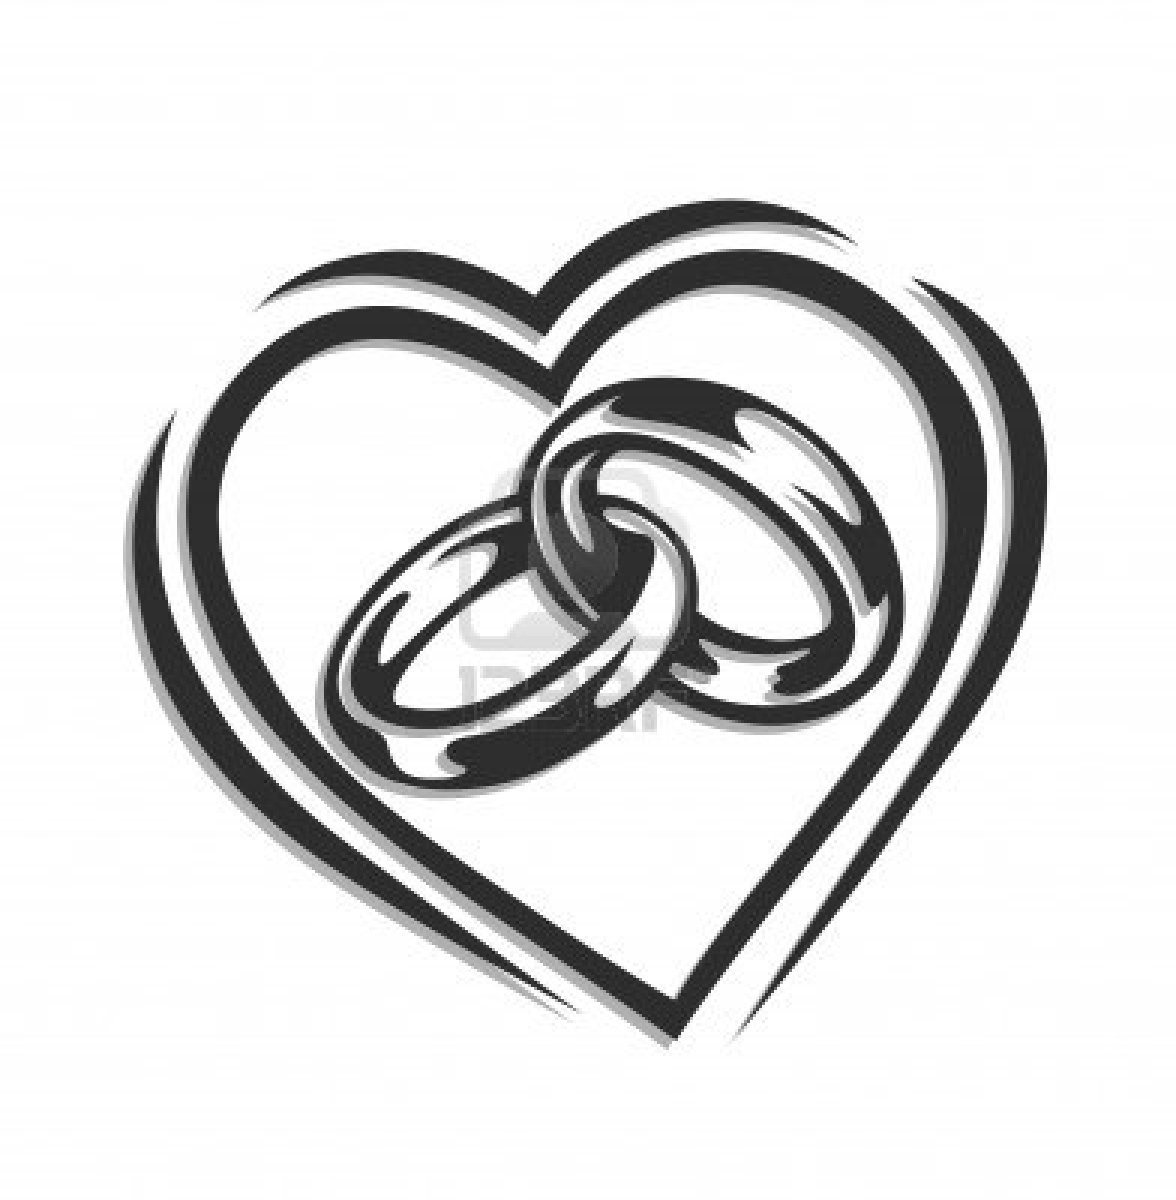 Wedding rings clipart - ClipartFox